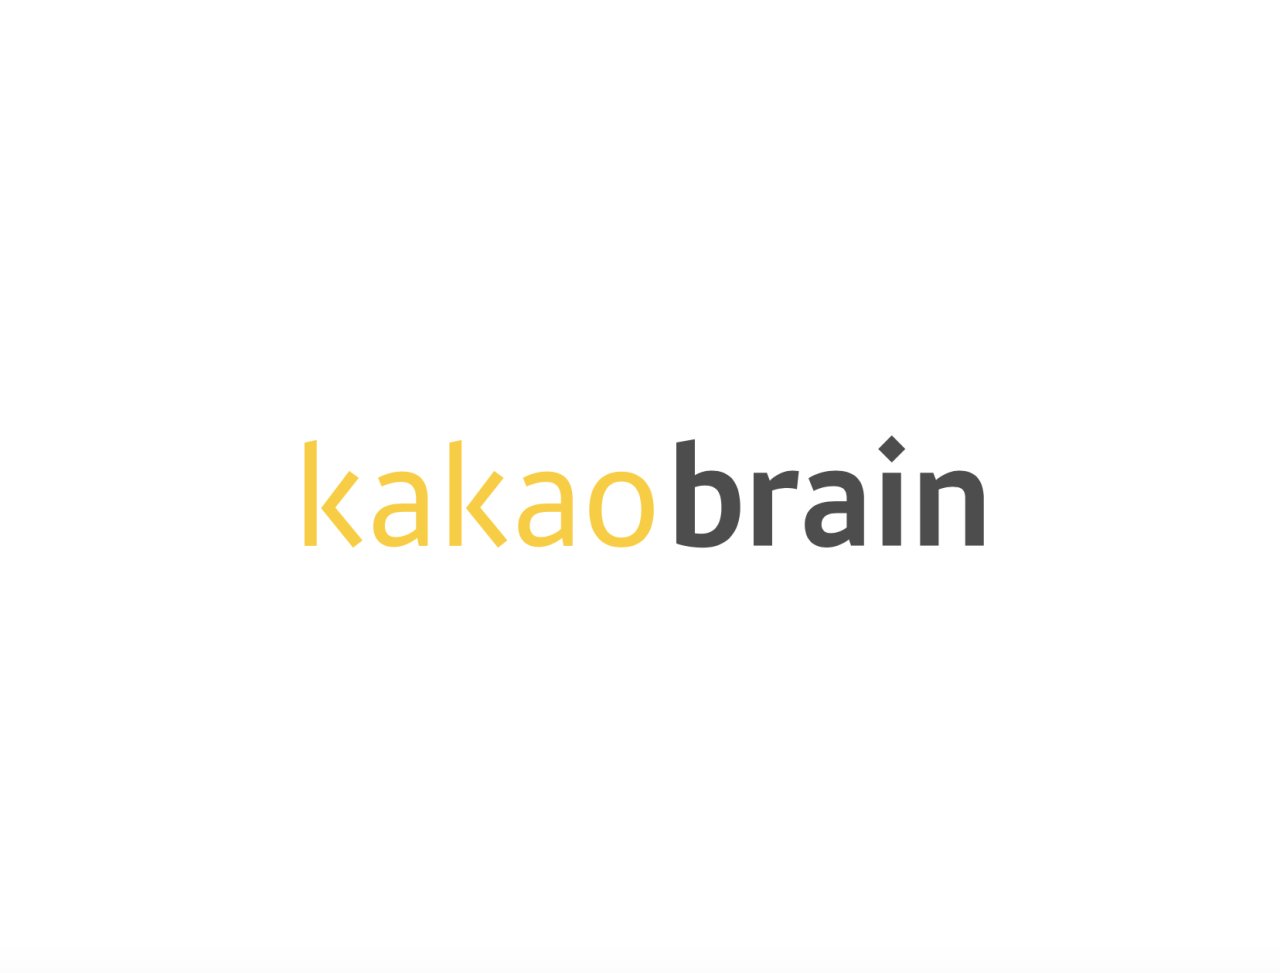 The corporate logo of Kakao Brain (Kakao Brain)